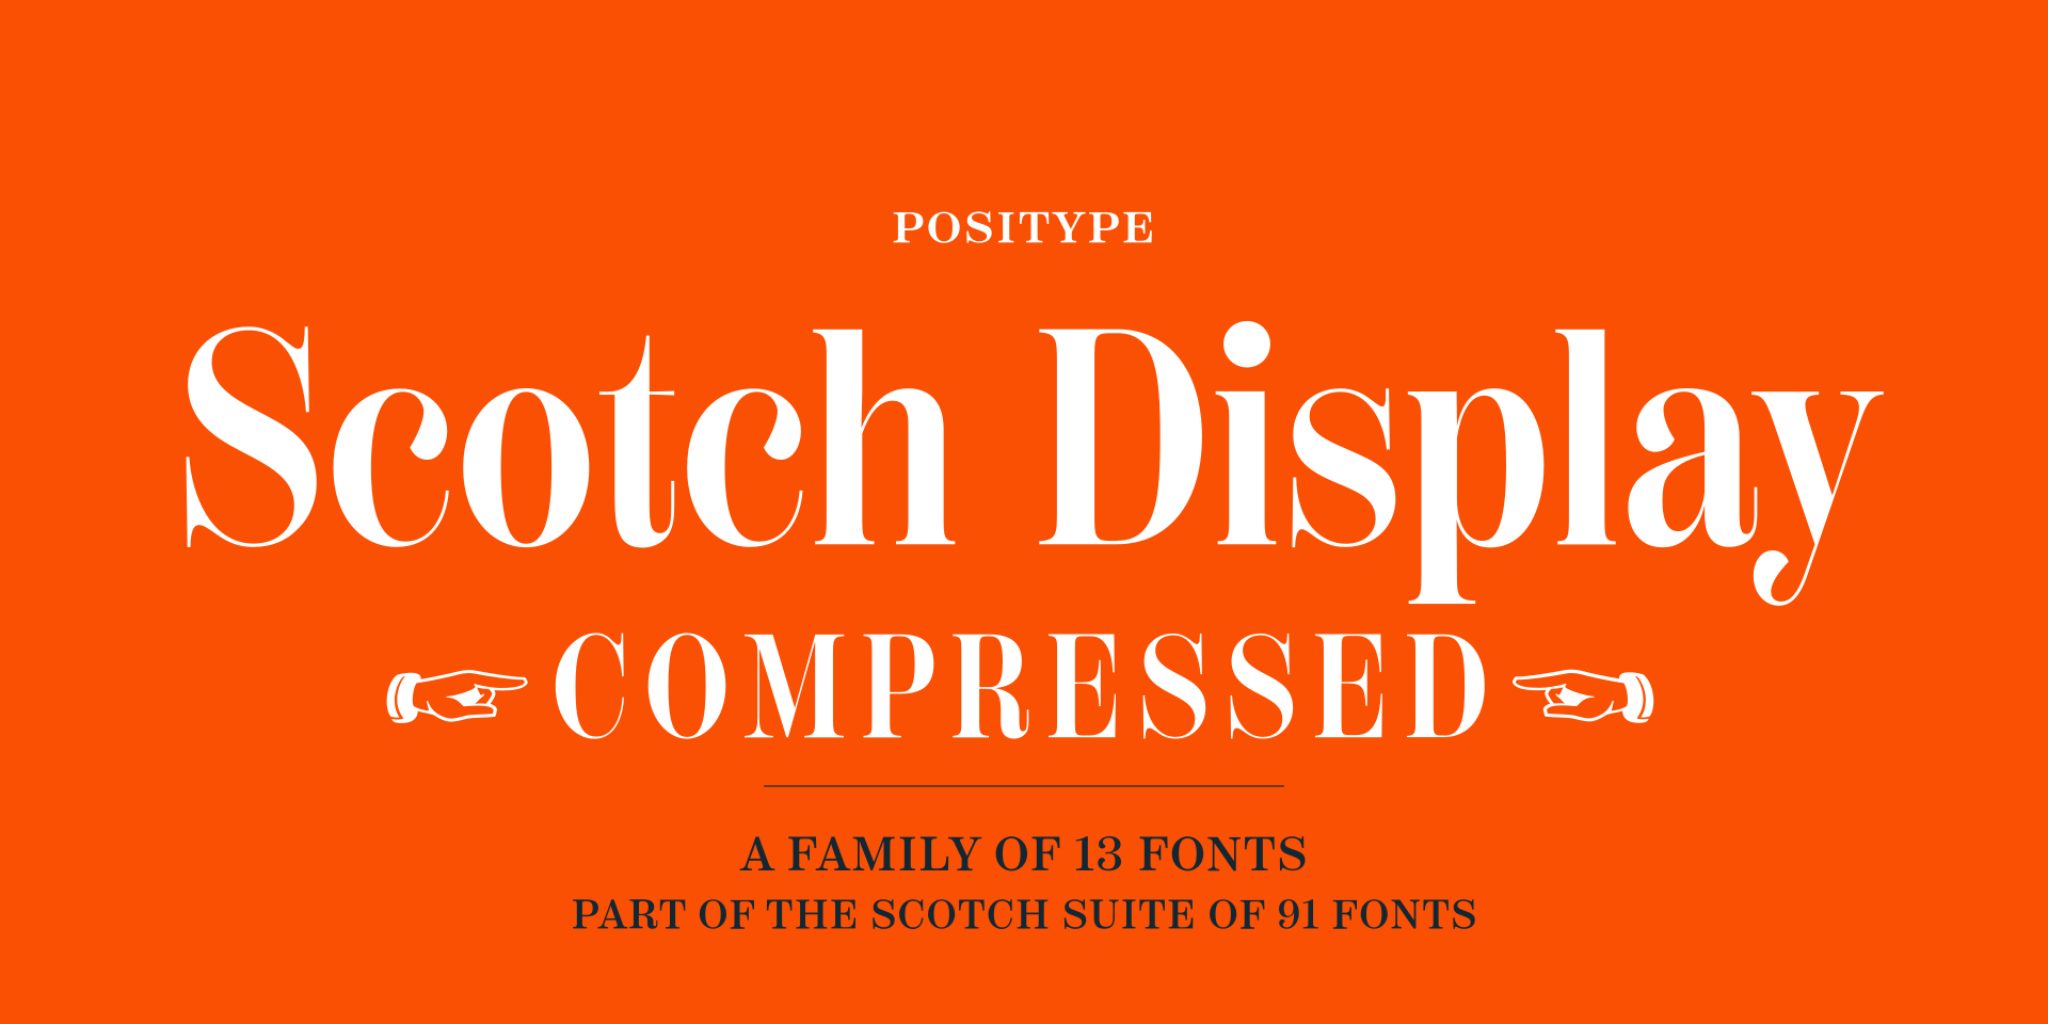 Scotch Display Compressed Positype